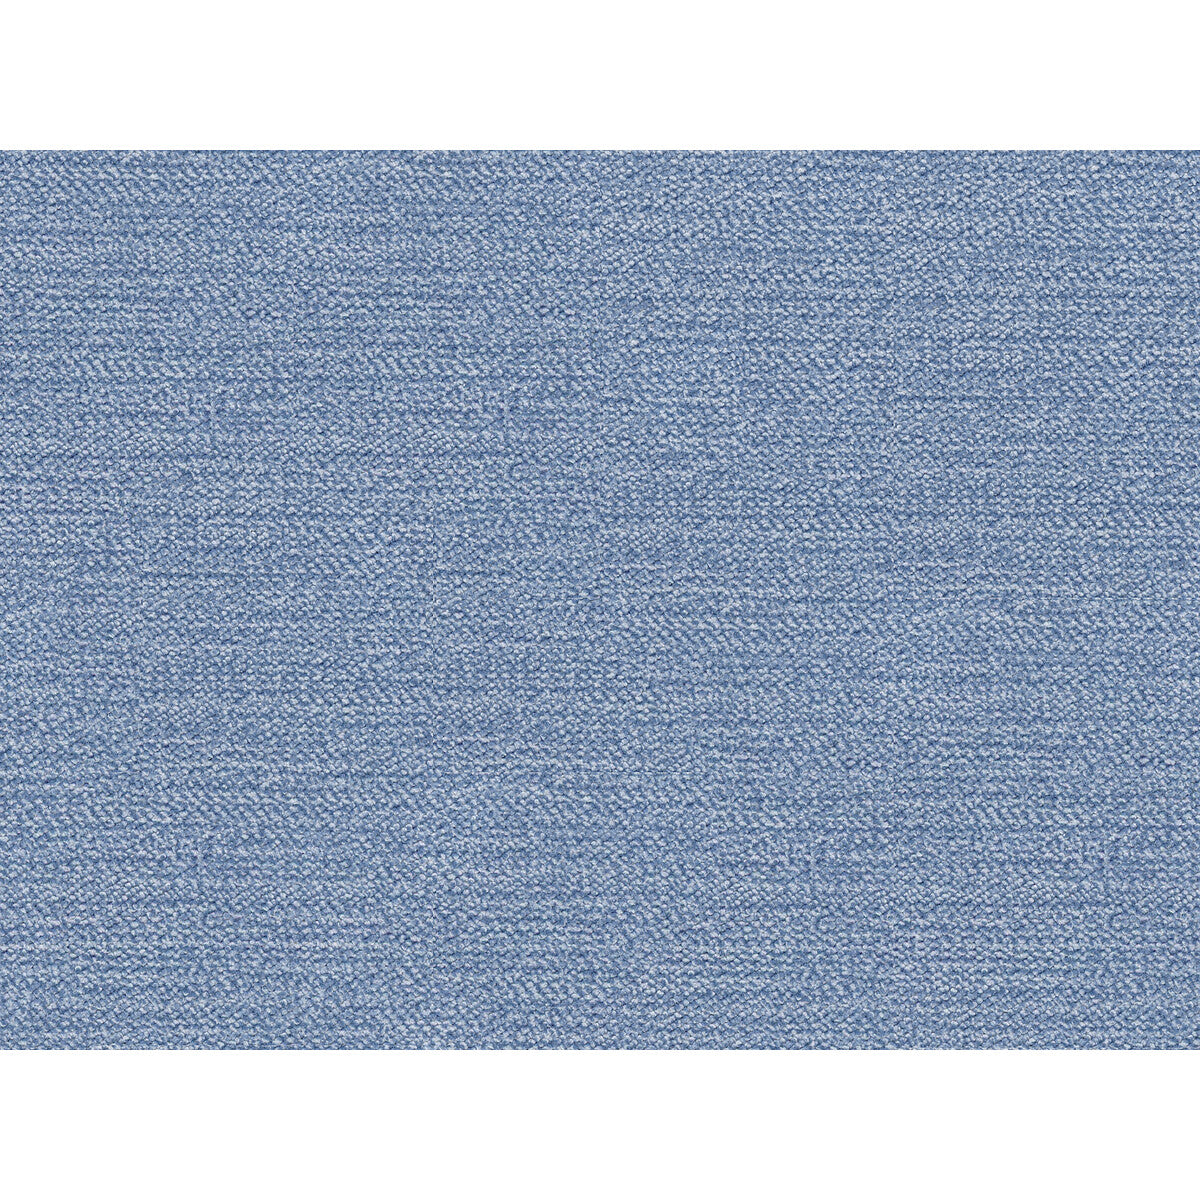 Kravet Smart fabric in 34294-15 color - pattern 34294.15.0 - by Kravet Smart